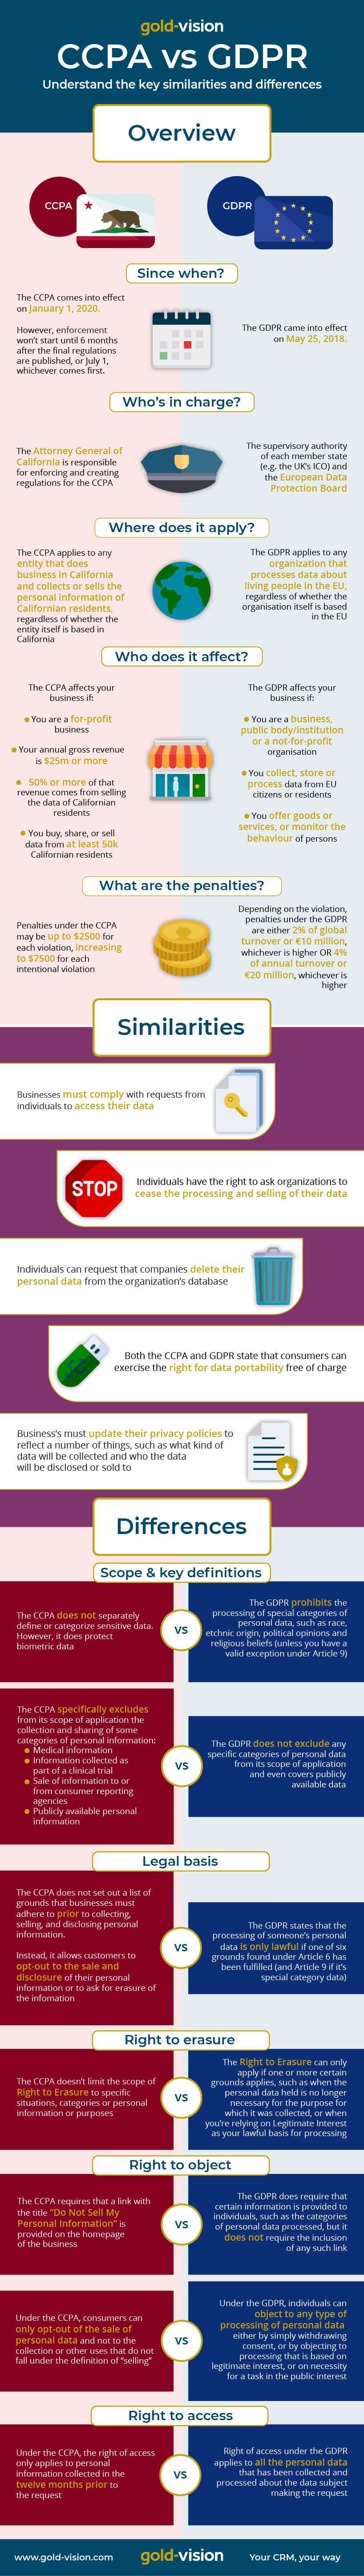 CCPA vs GDPR Infographic